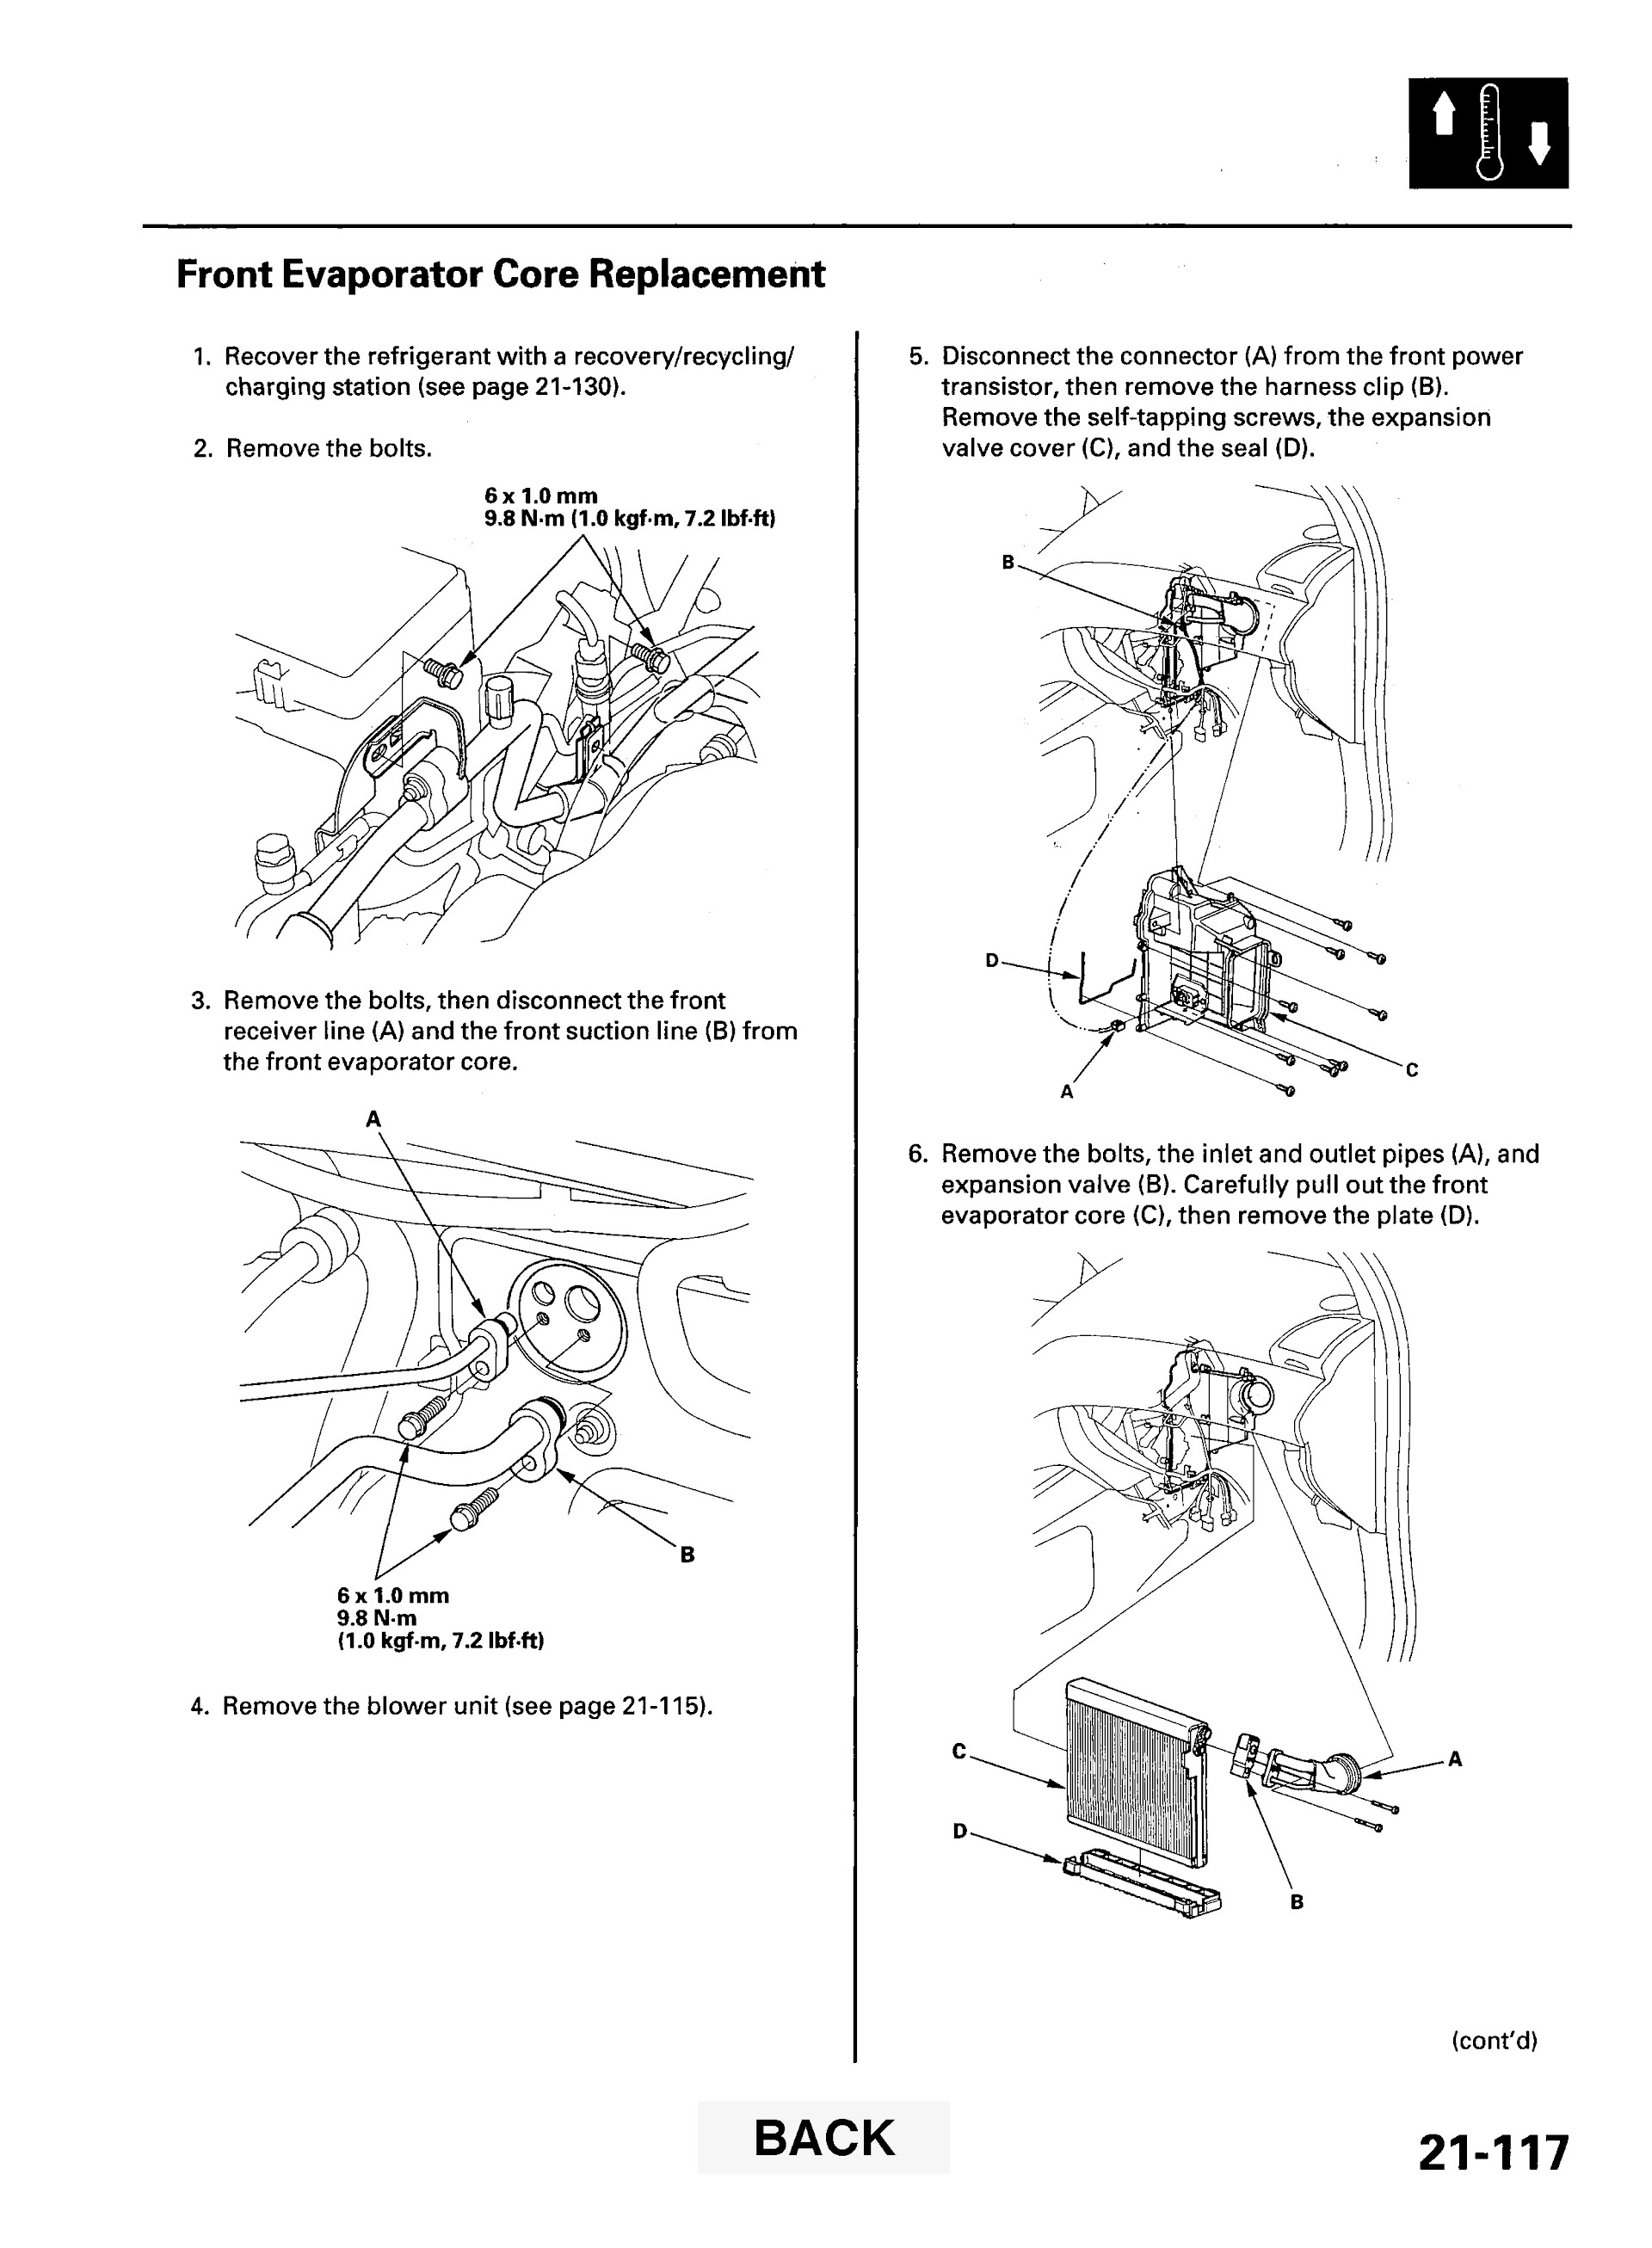 2009 Acura MDX Repair Manual, Front Evaporator Core Replacement